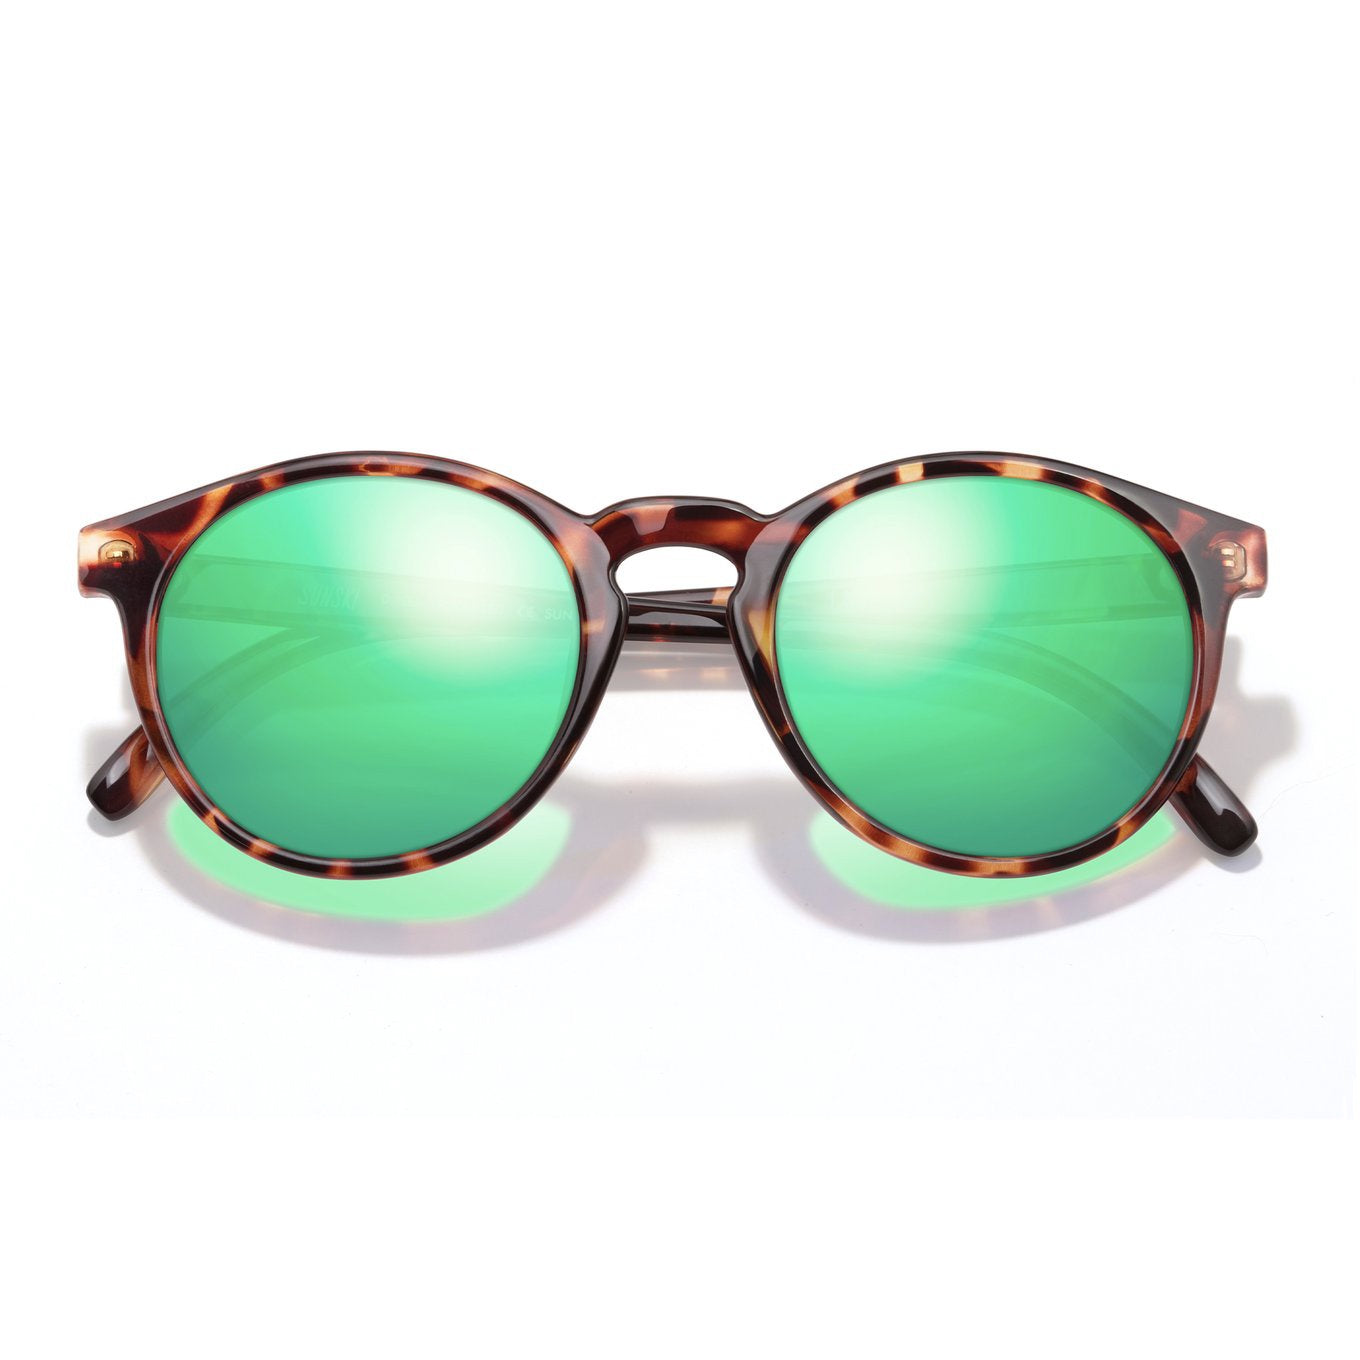 SUNSKI Sunglasses - Dipsea Tortoise Emerald